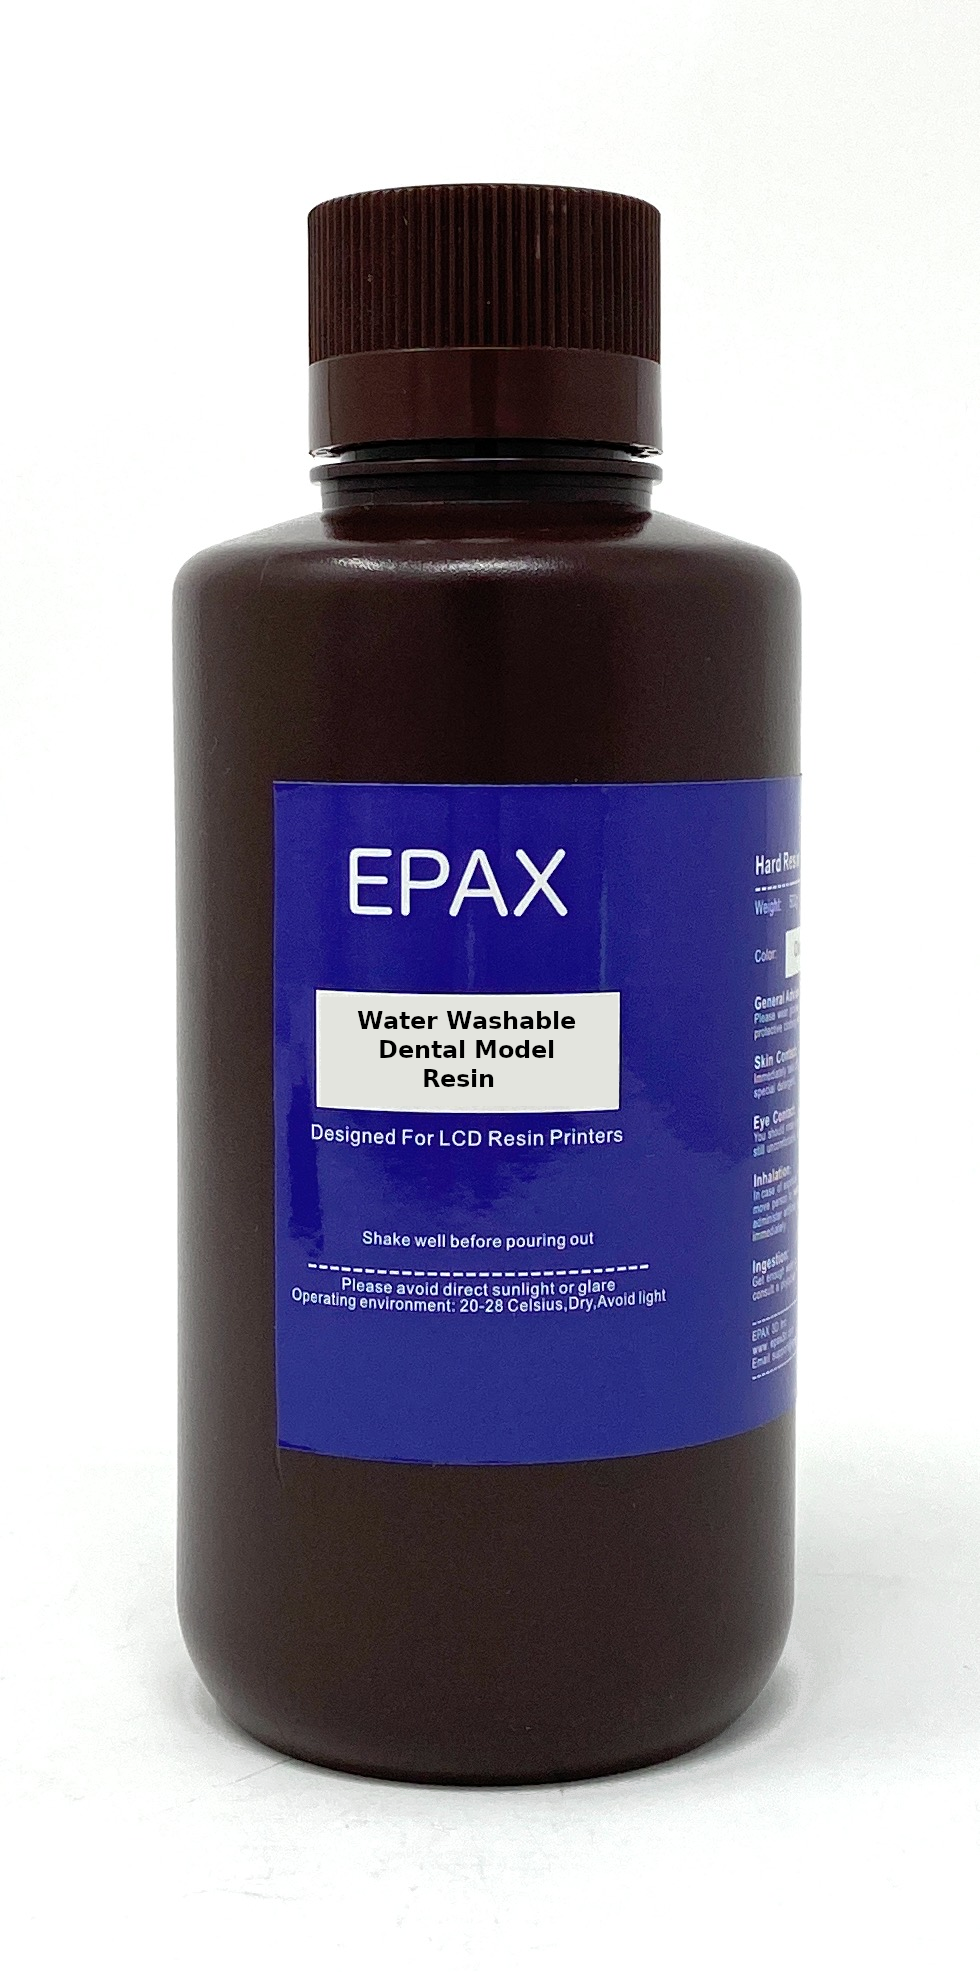 EPAX Water Washable Dental Model Resin